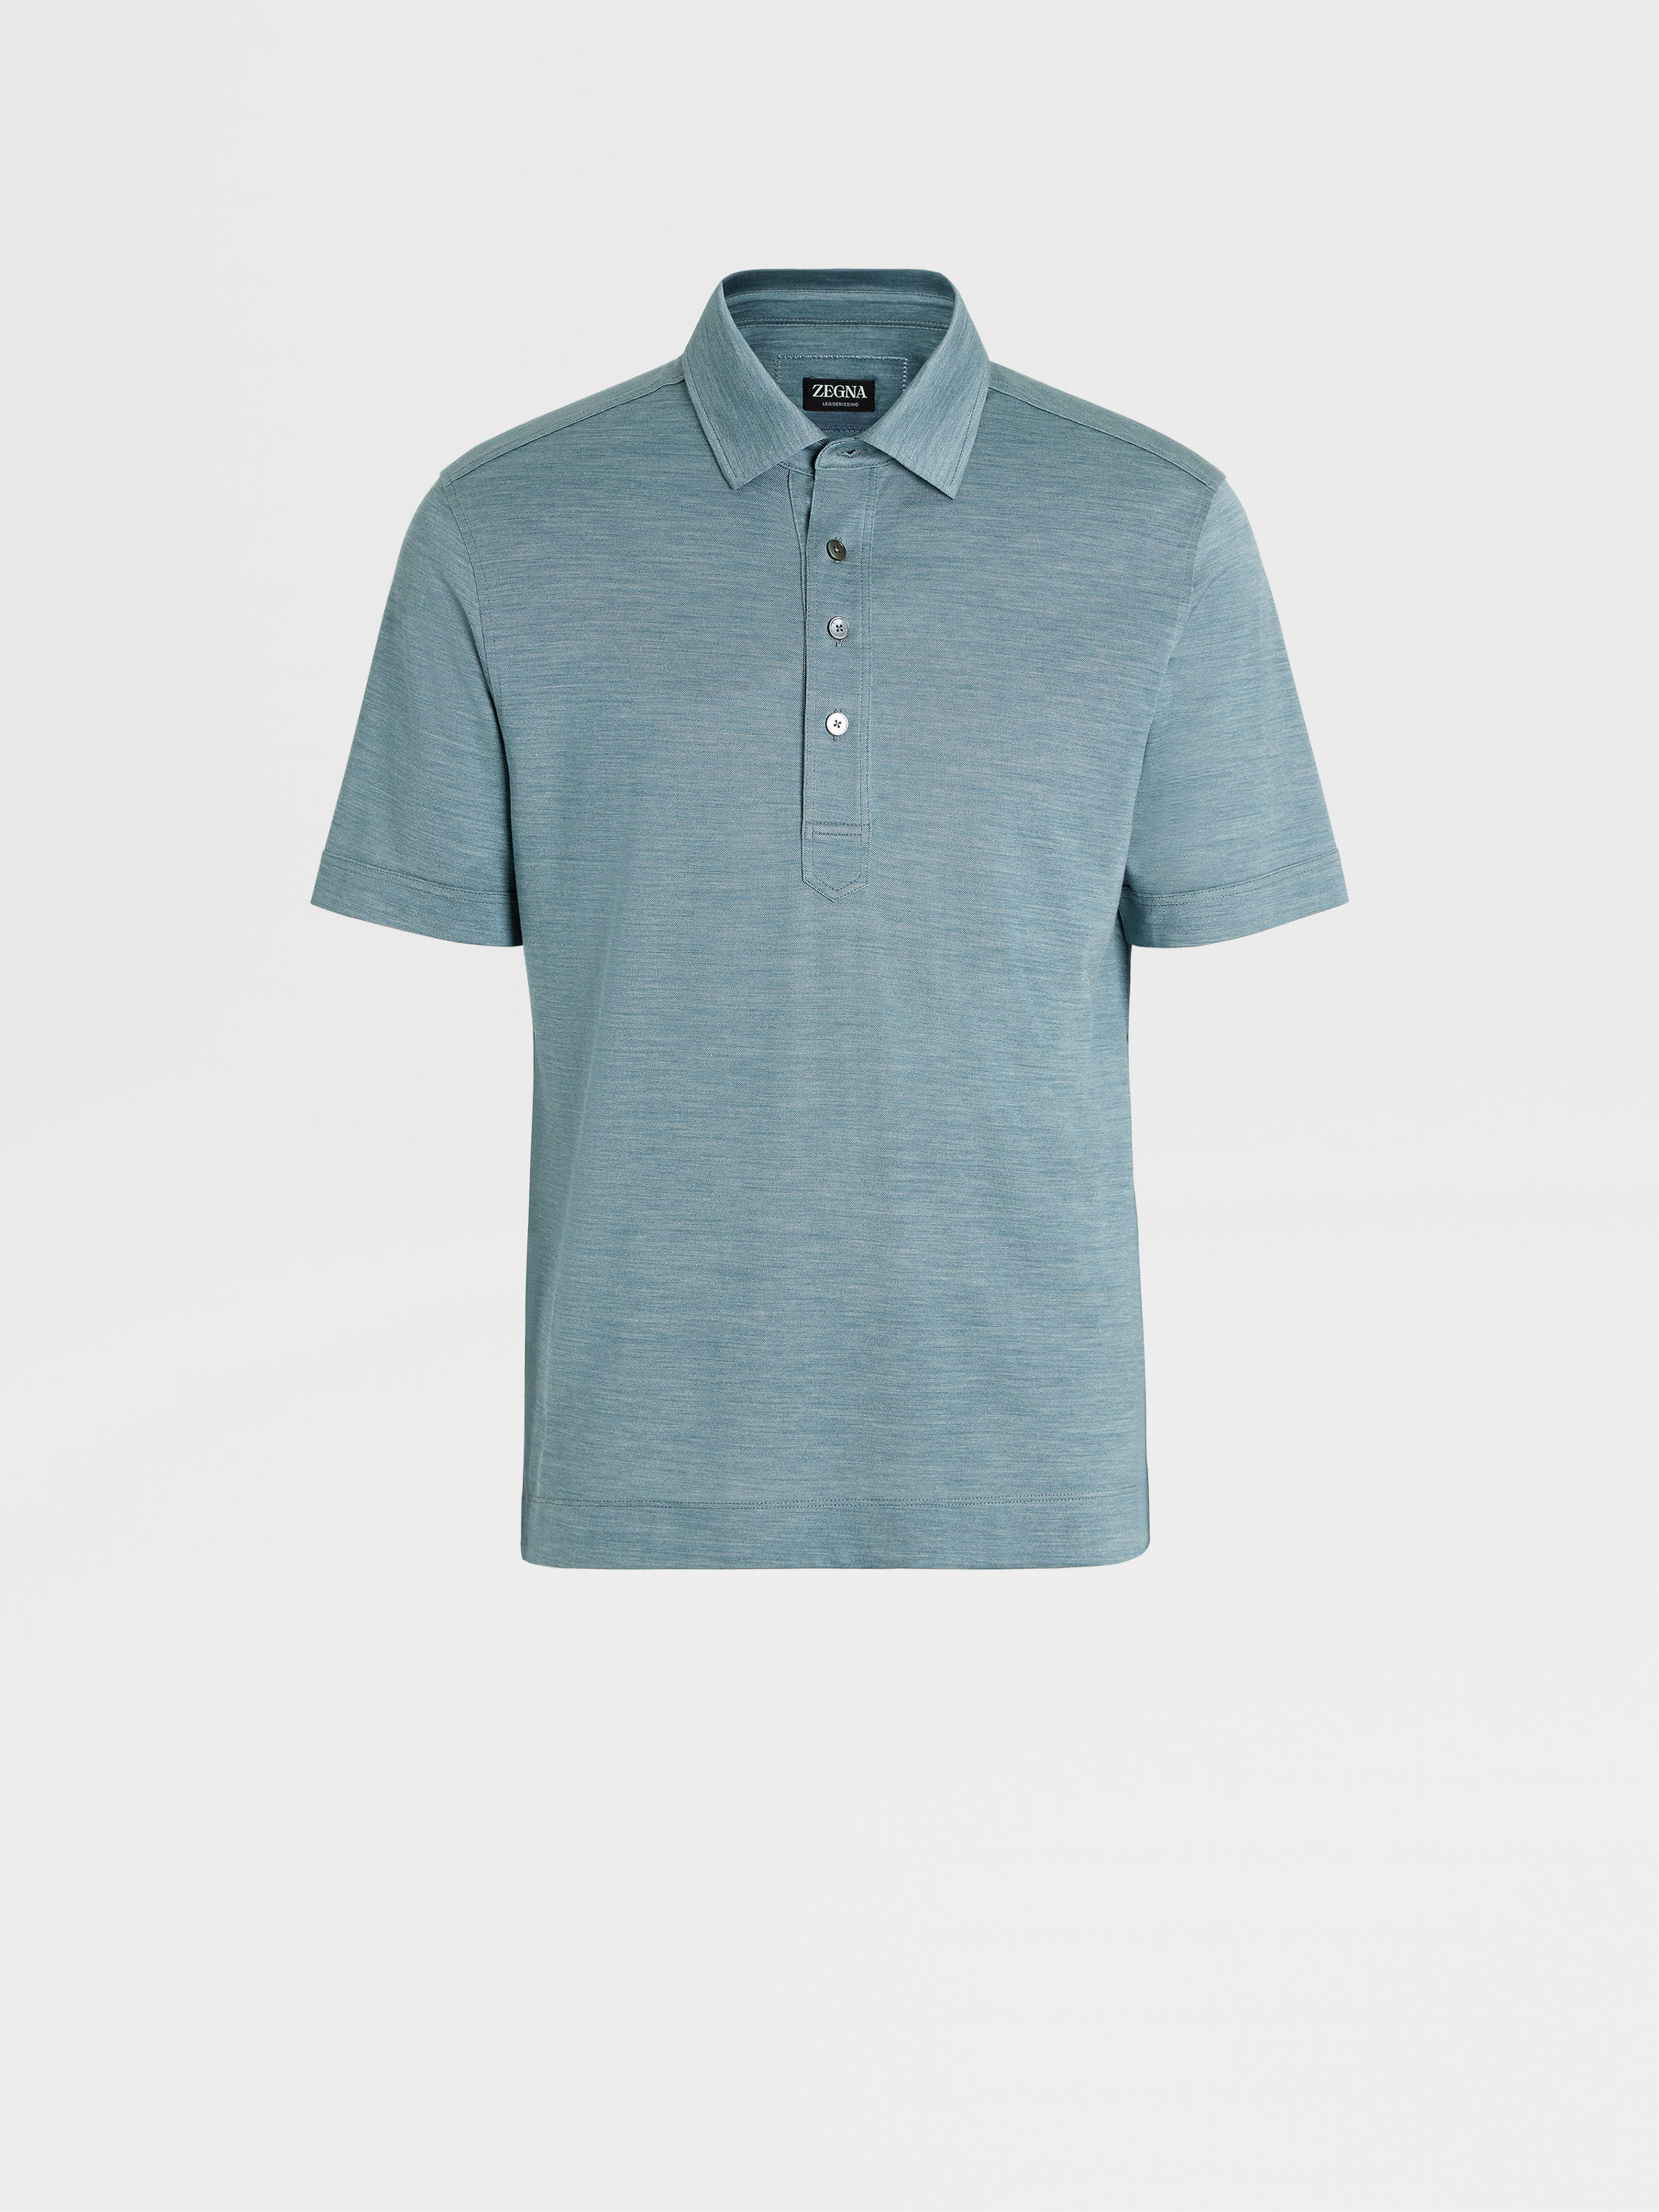 Teal Blue and Light Grey Leggerissimo Cotton and Silk Polo Shirt FW23  26596590 | Zegna MY | 